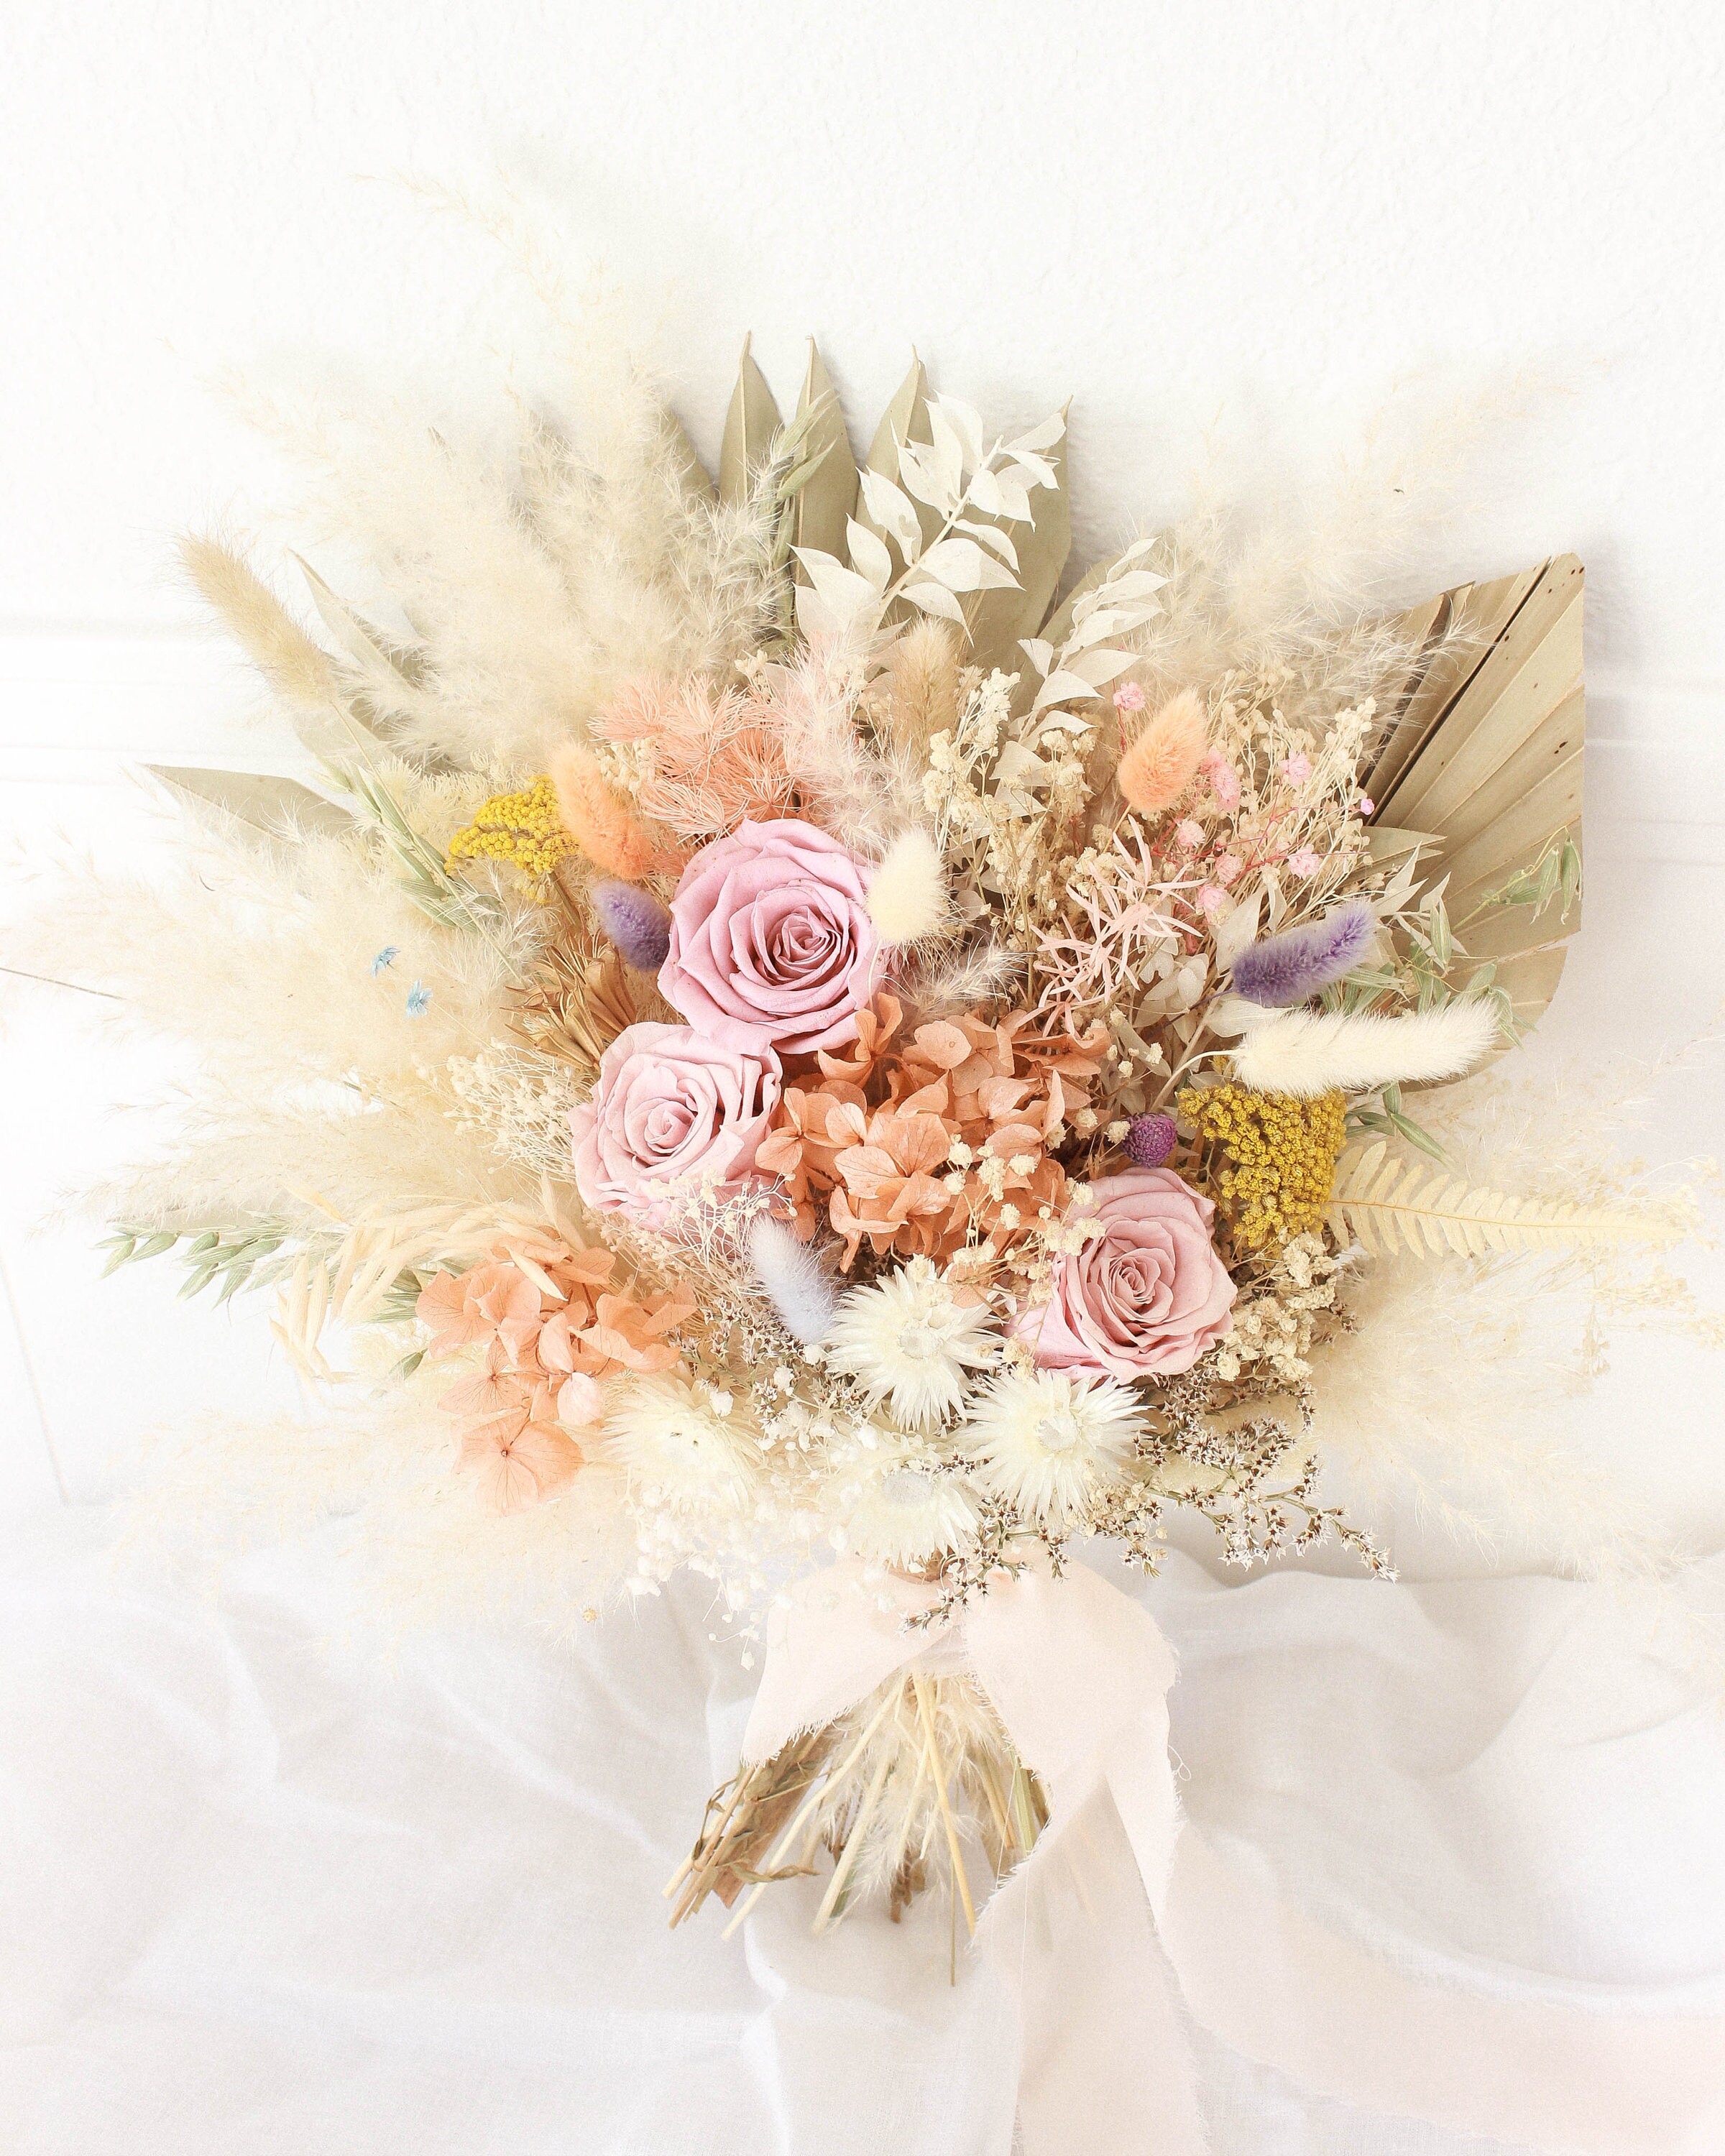 Neutral Earthy Tone Dried Flowers Bouquet / Wildflowers Bouquet / White  Muted Tone Flowers Arrangement 